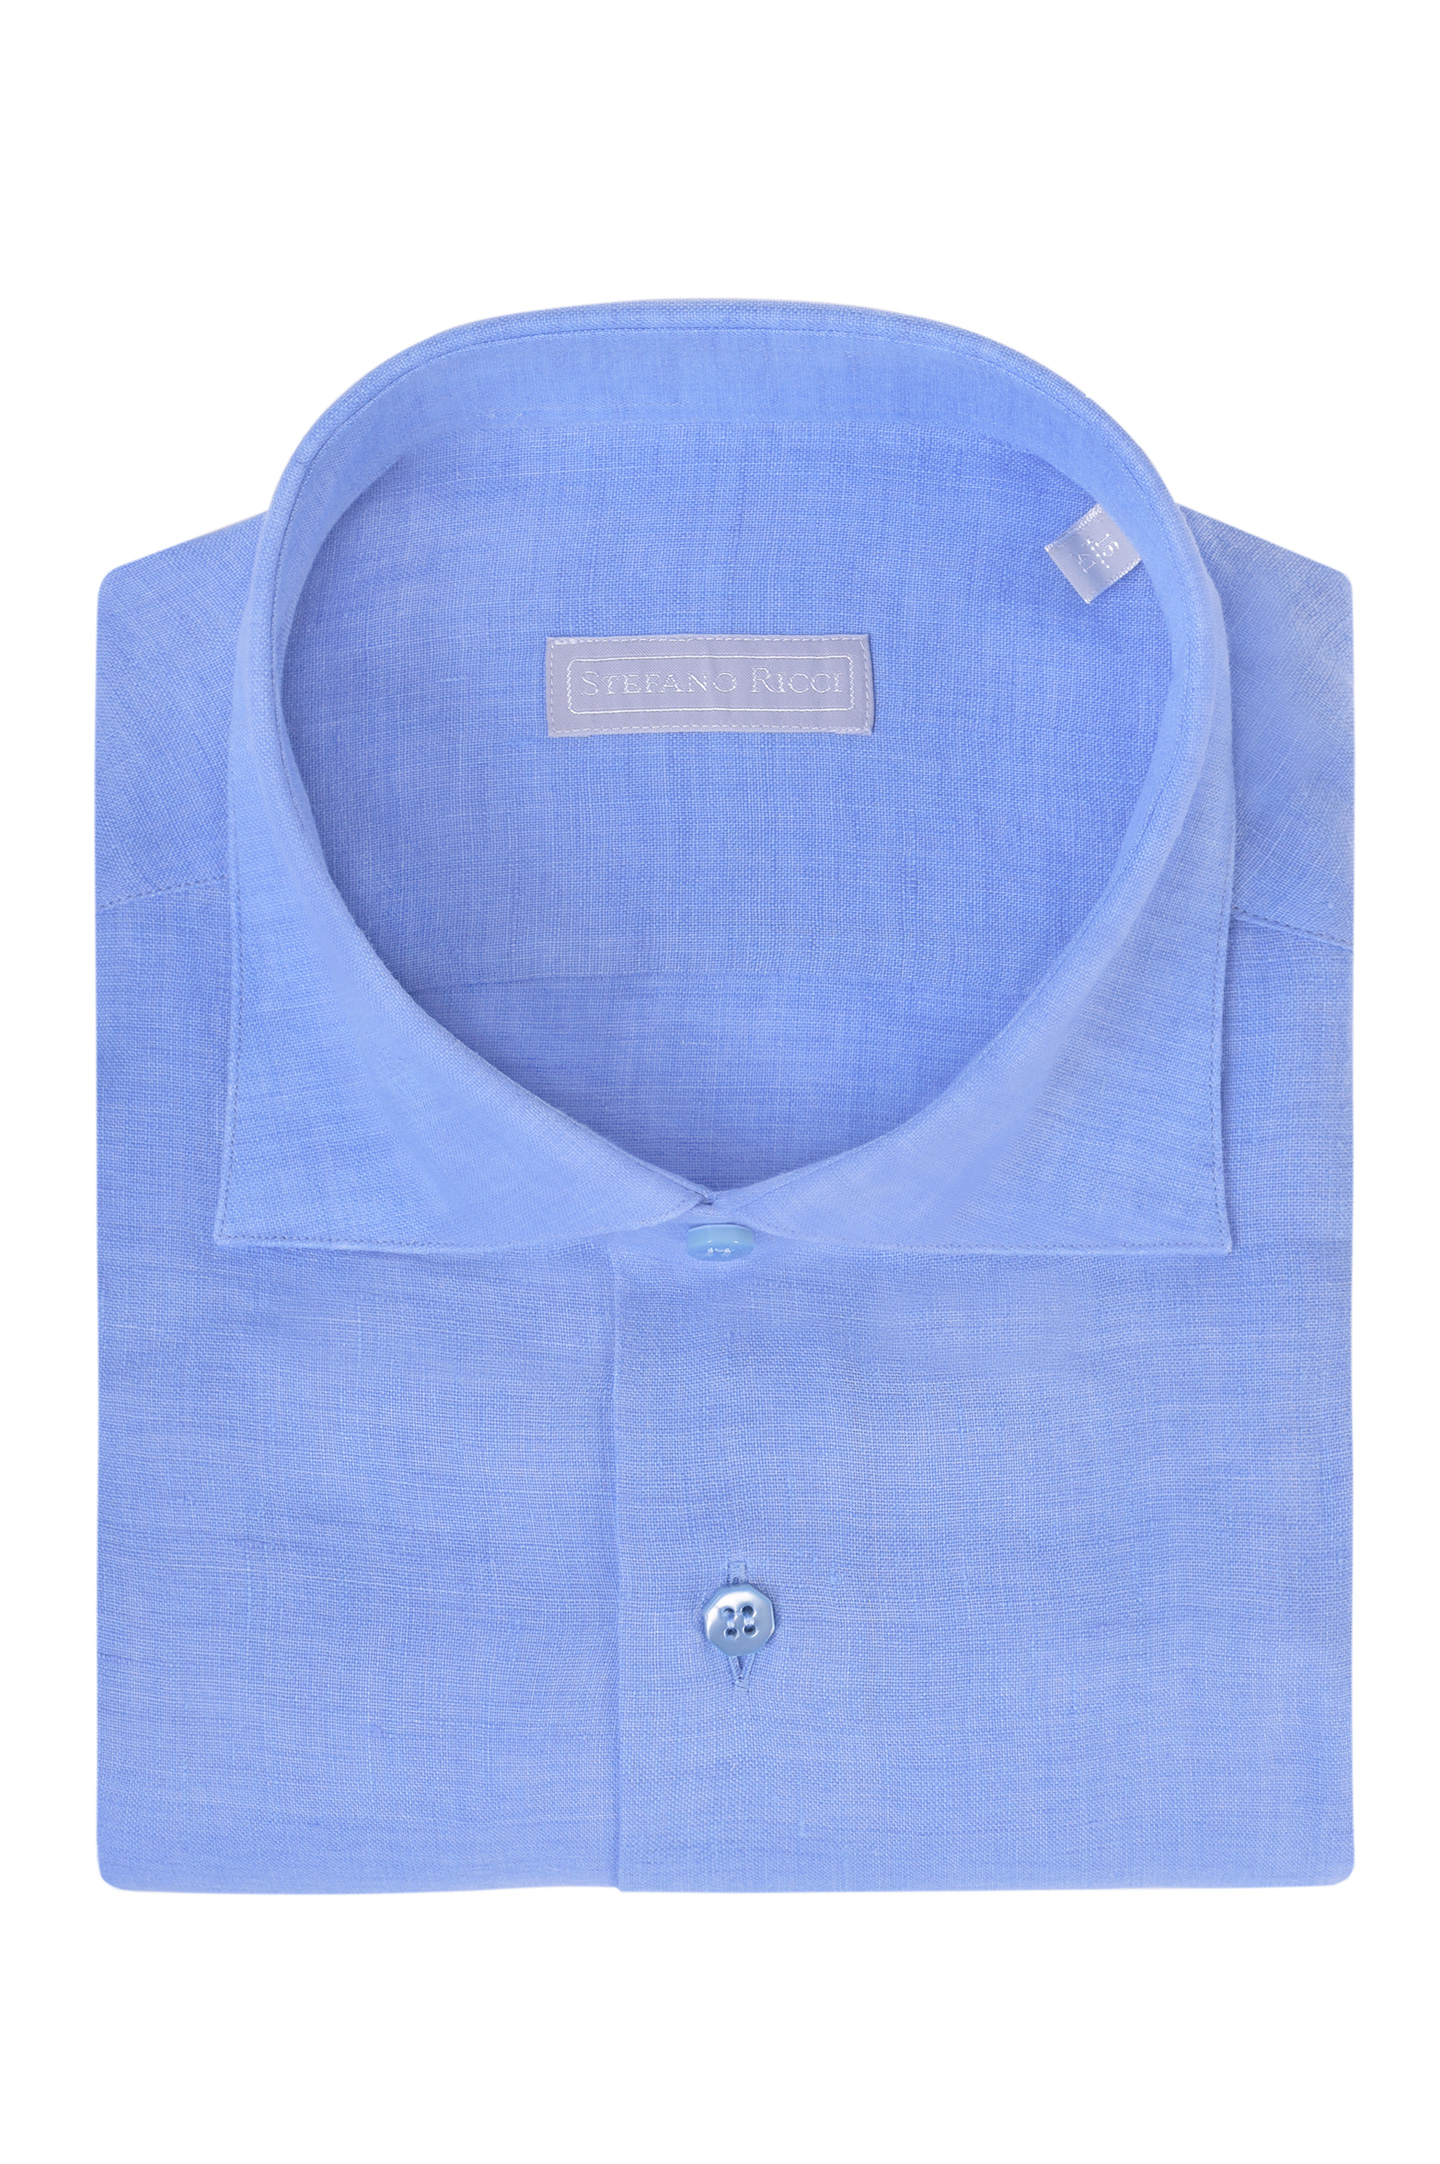 Рубашка STEFANO RICCI MC004067 L1180, цвет: Синий, Мужской